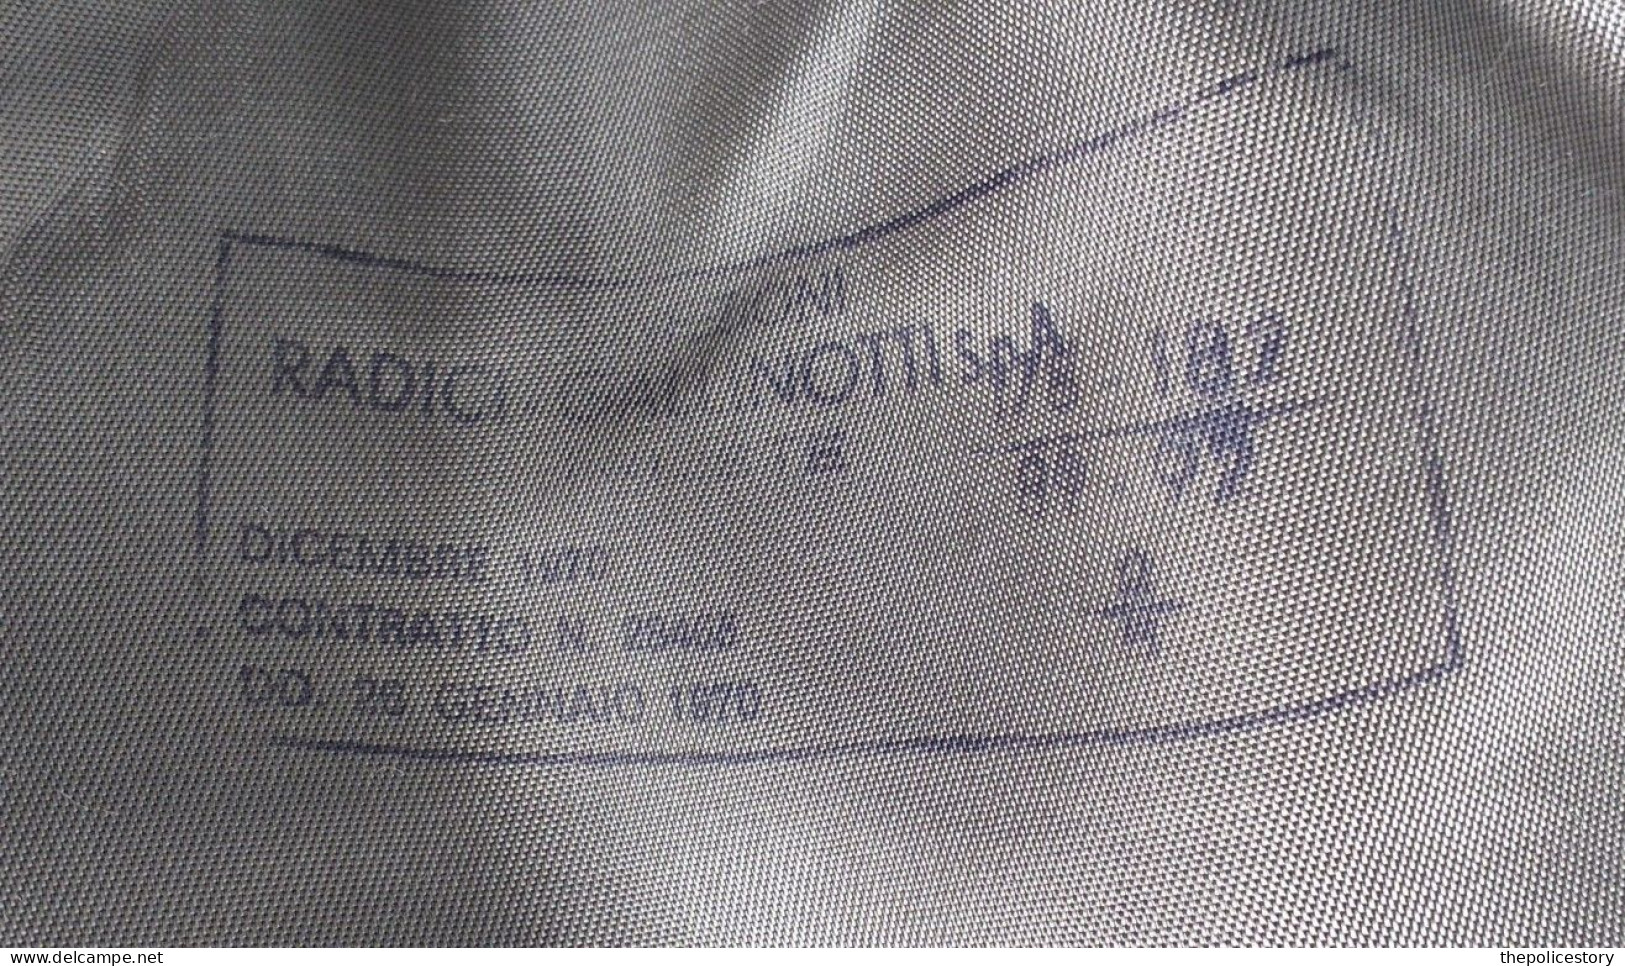 Giacca M48 camicia cravatta S.Ten. CAR 28° Btg."Pavia" Div.Mecc. Folgore anni'70